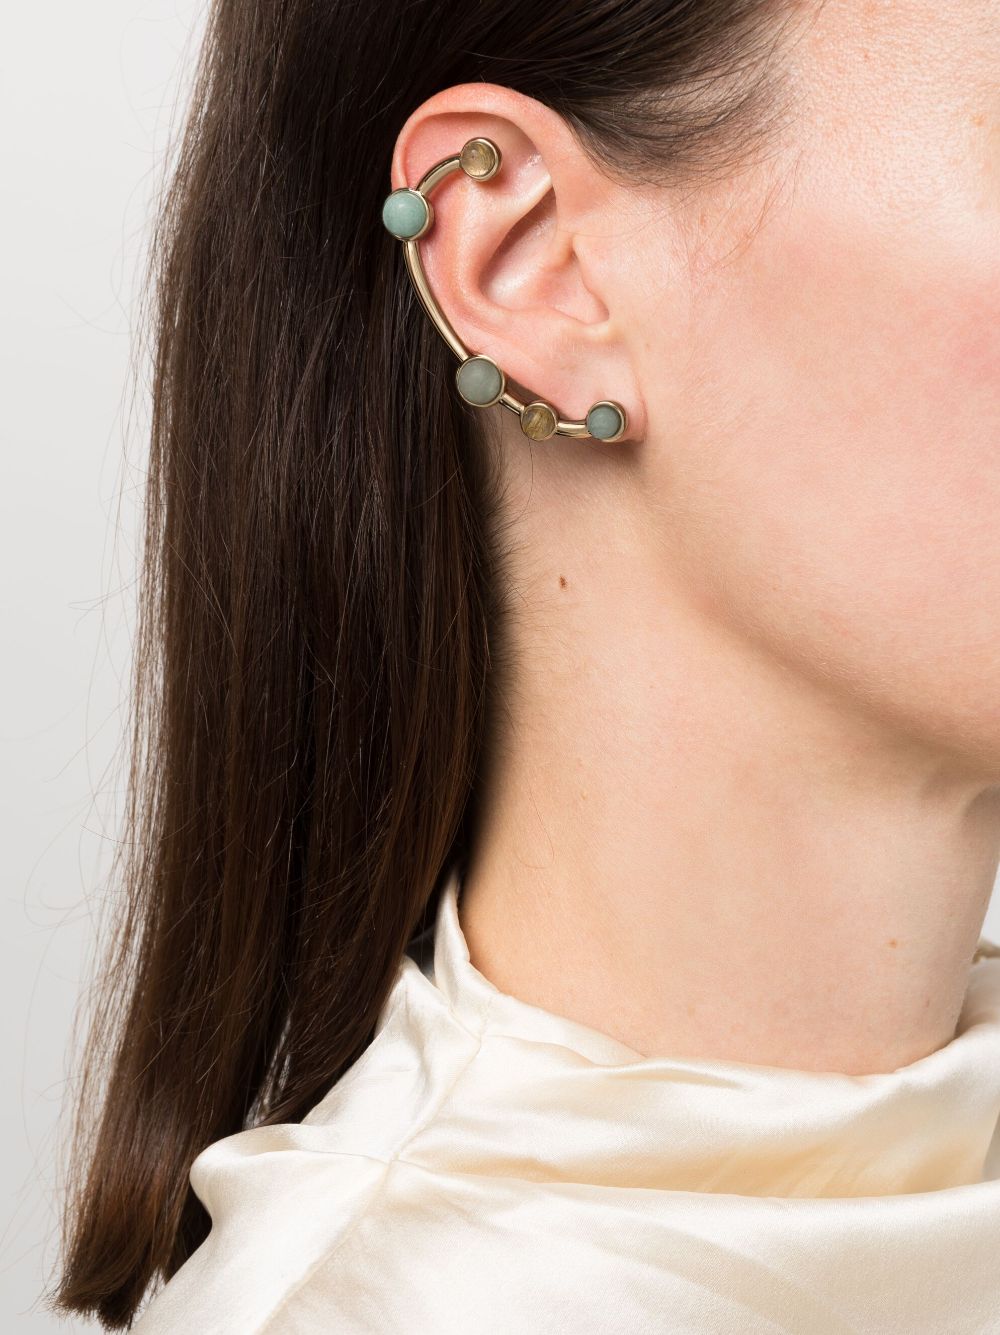 Women's Gold Zodiac Ear Cuff with Precious Stone Details